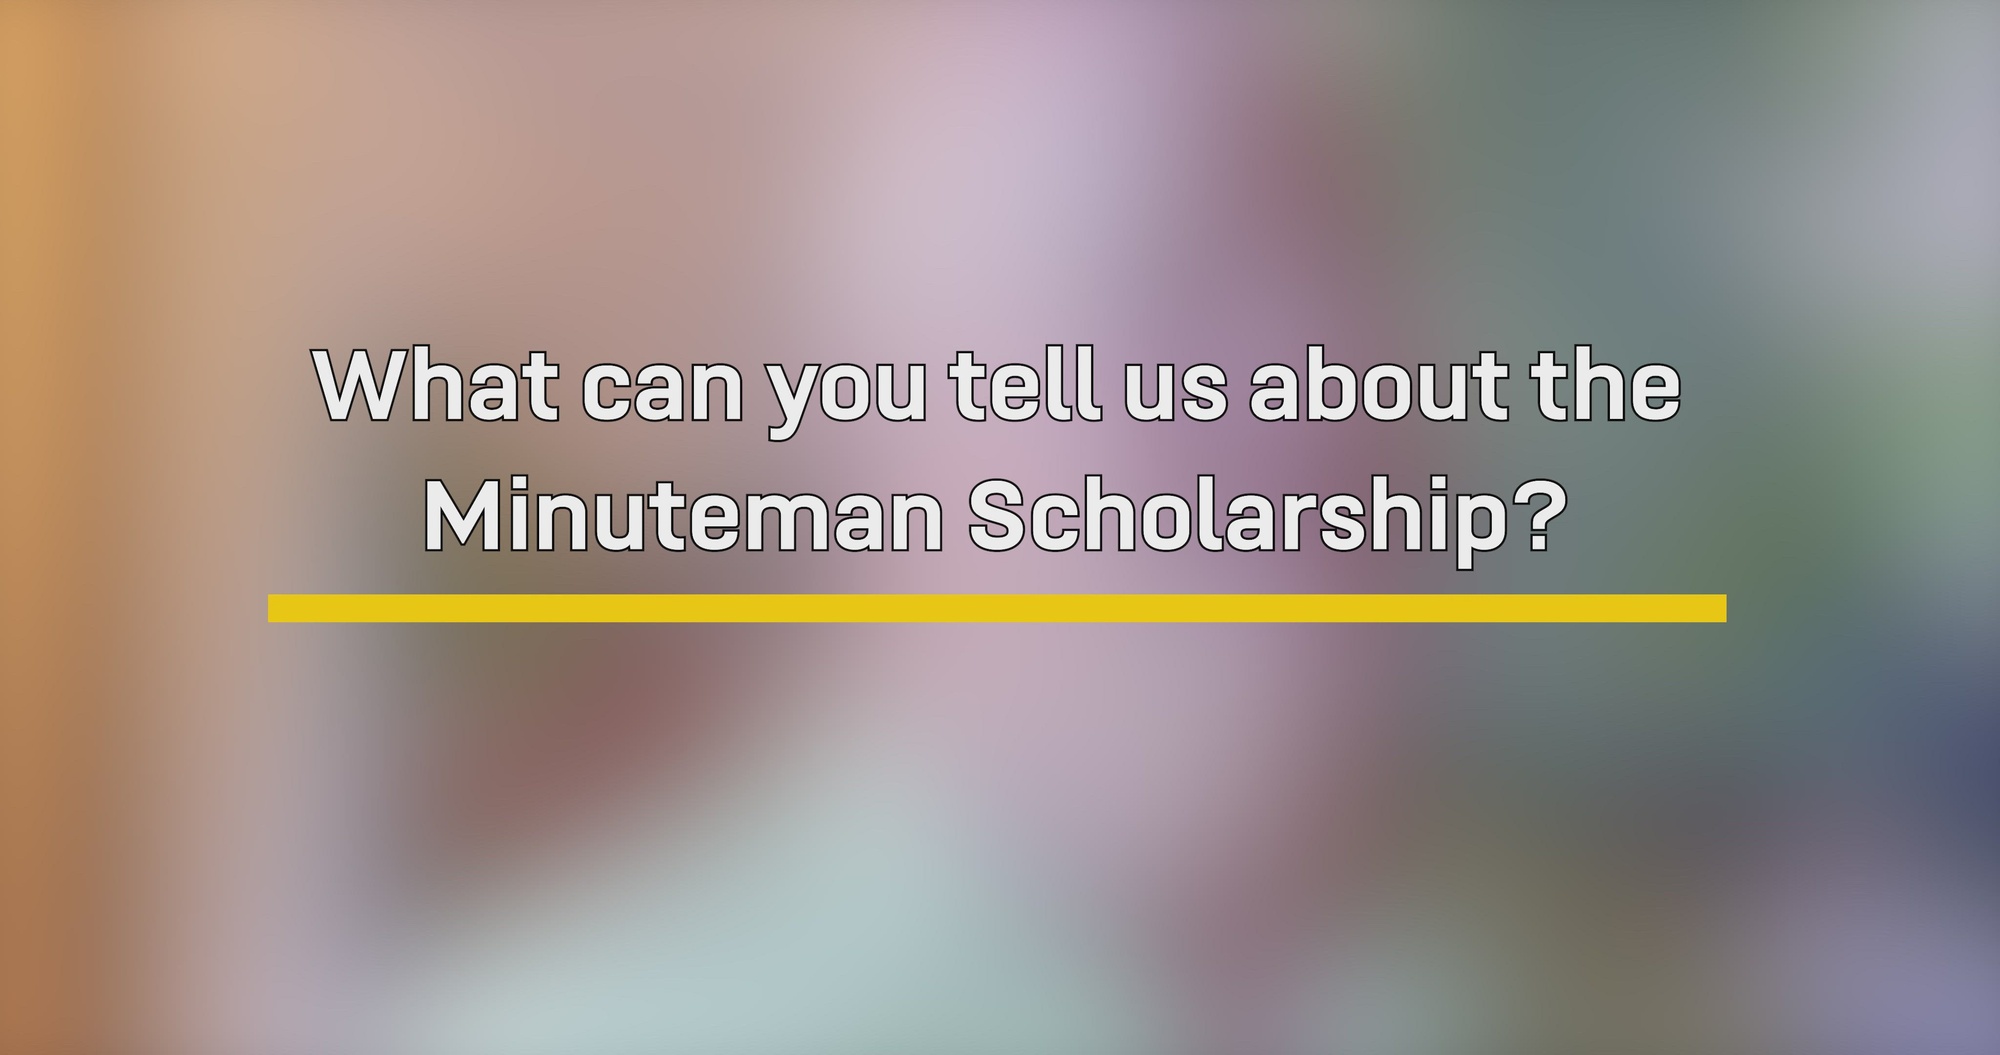 Army Reserve Ambassador Jim Bernet tells us about the Army Reserve Minuteman Scholarship.